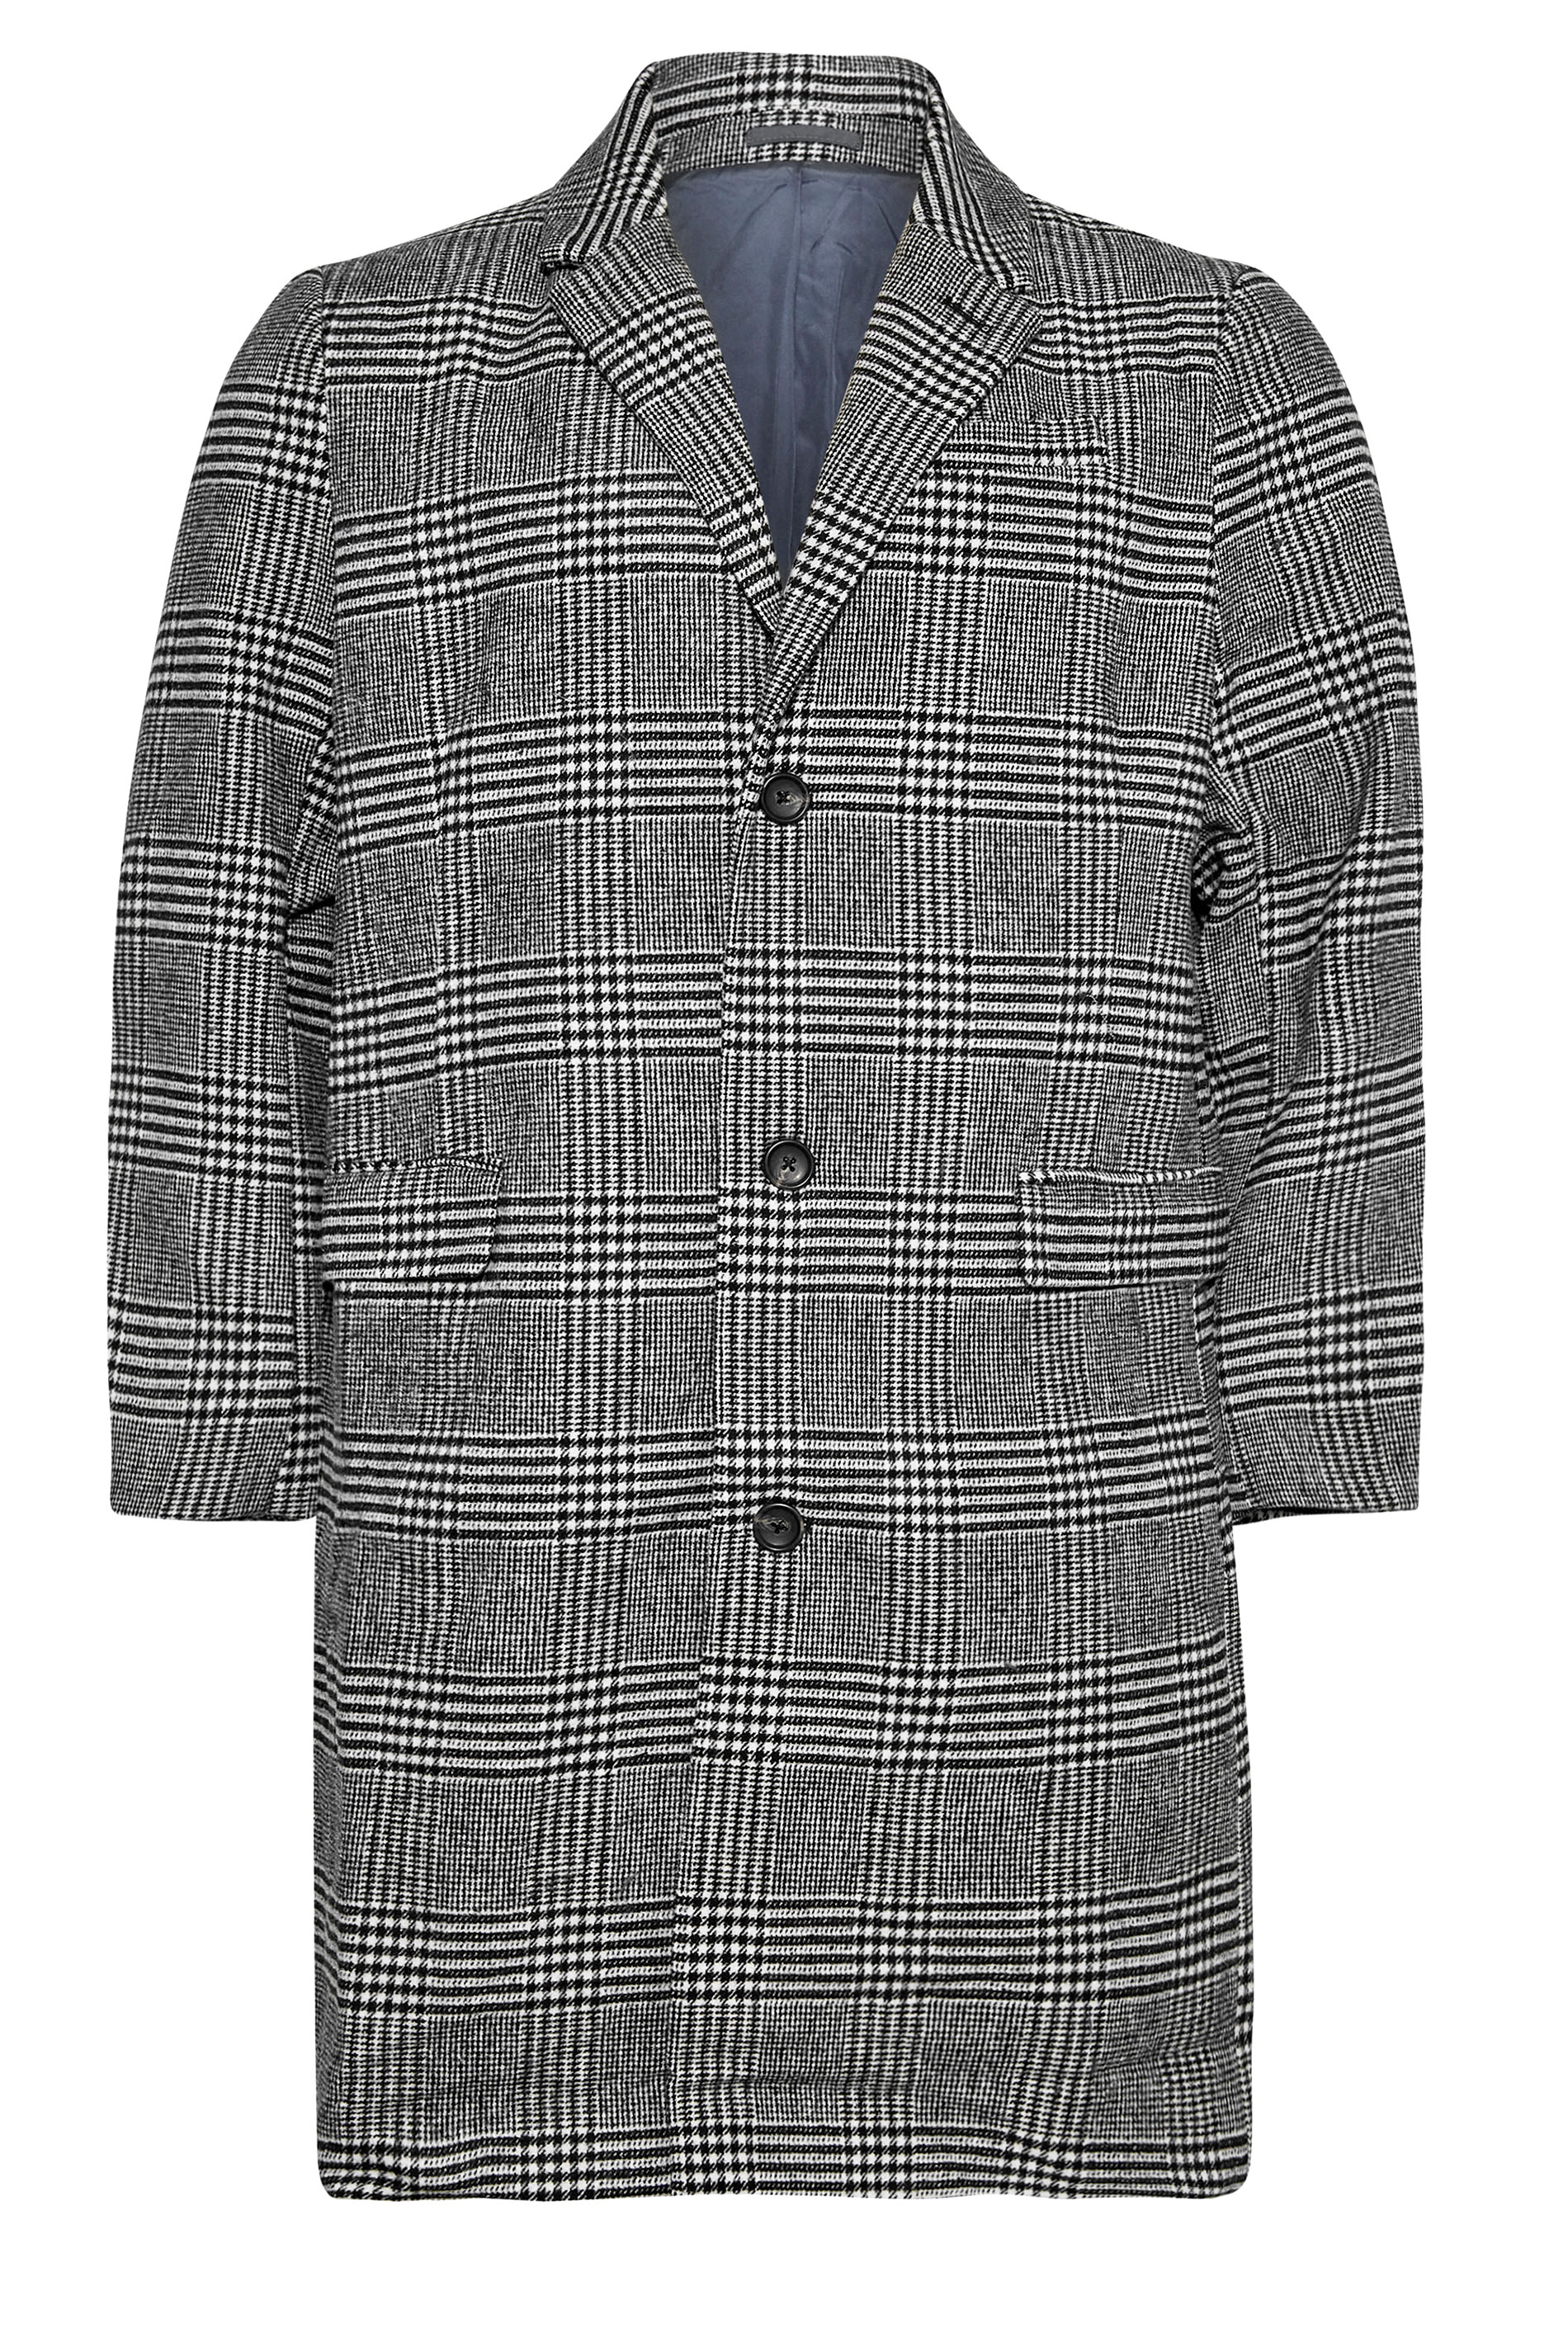 BadRhino Grey Check Overcoat | BadRhino 2